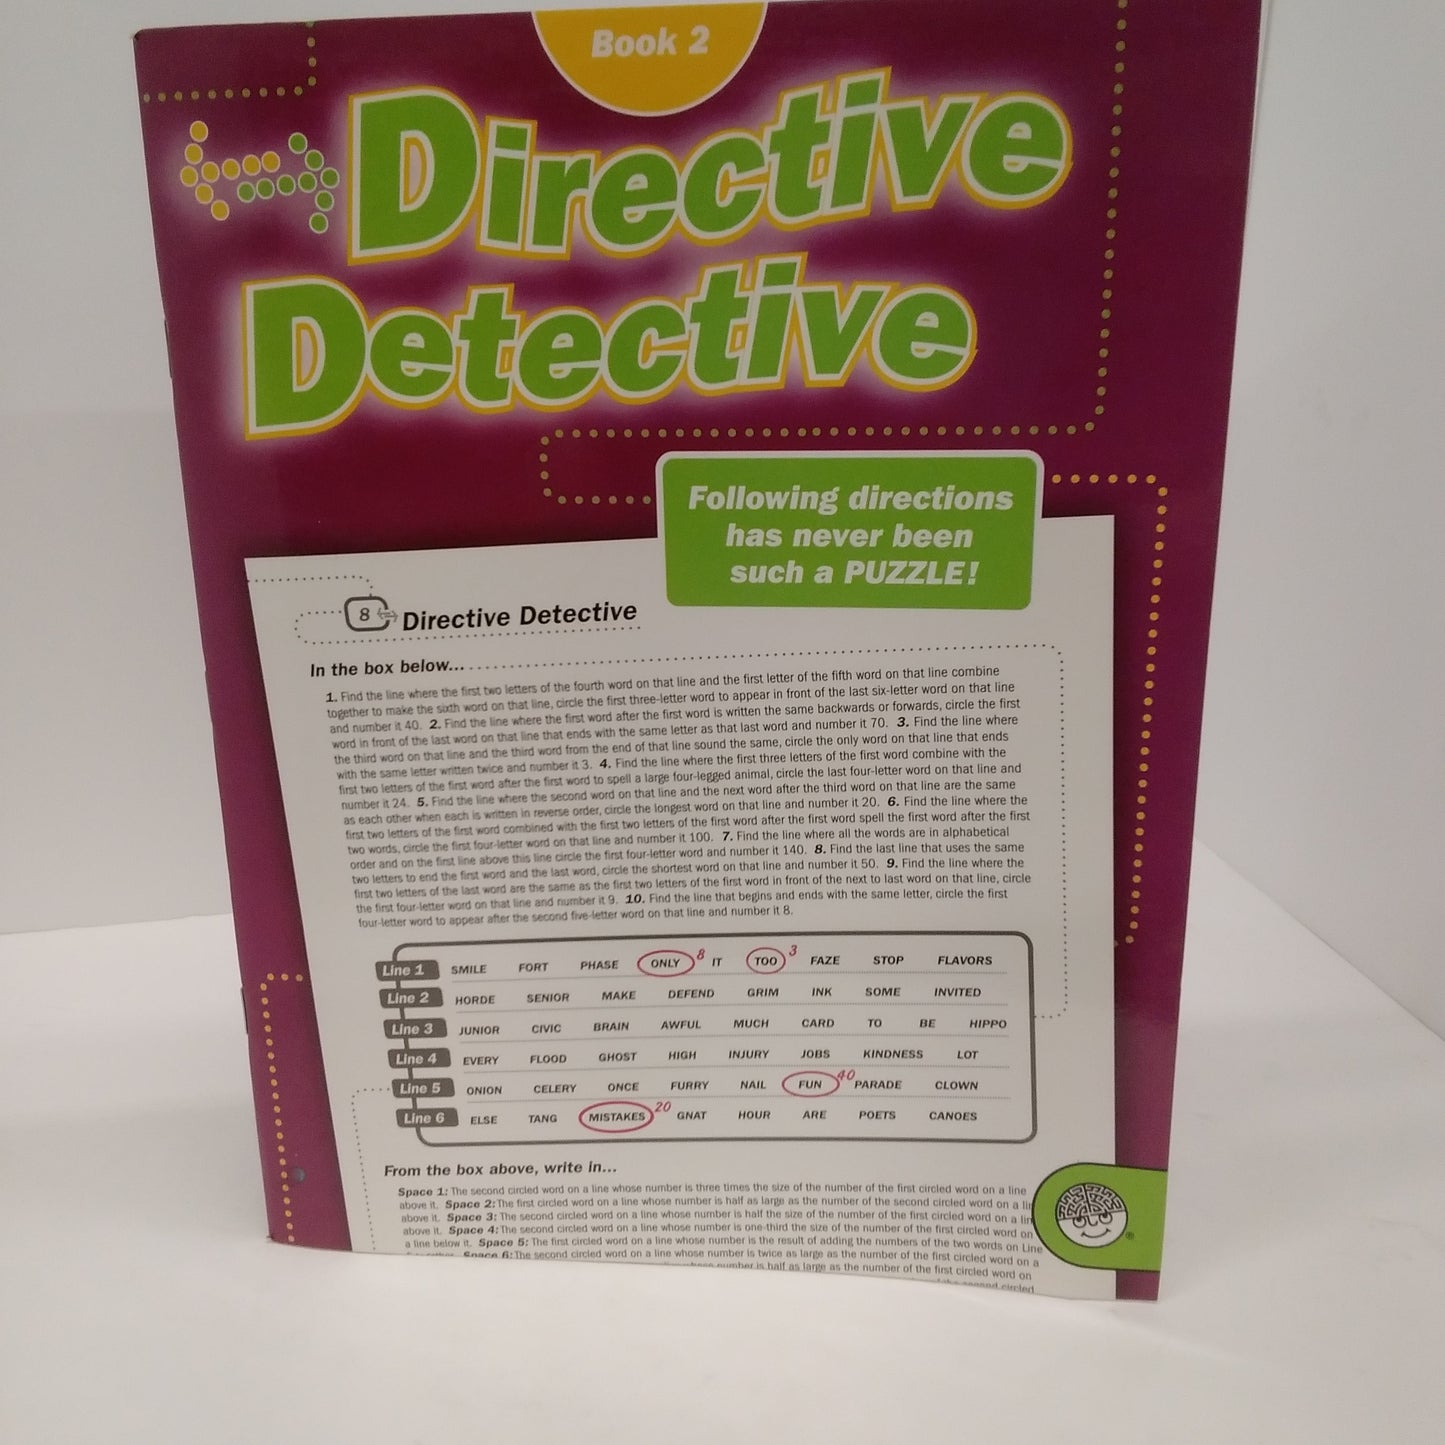 Directive Detective book 2